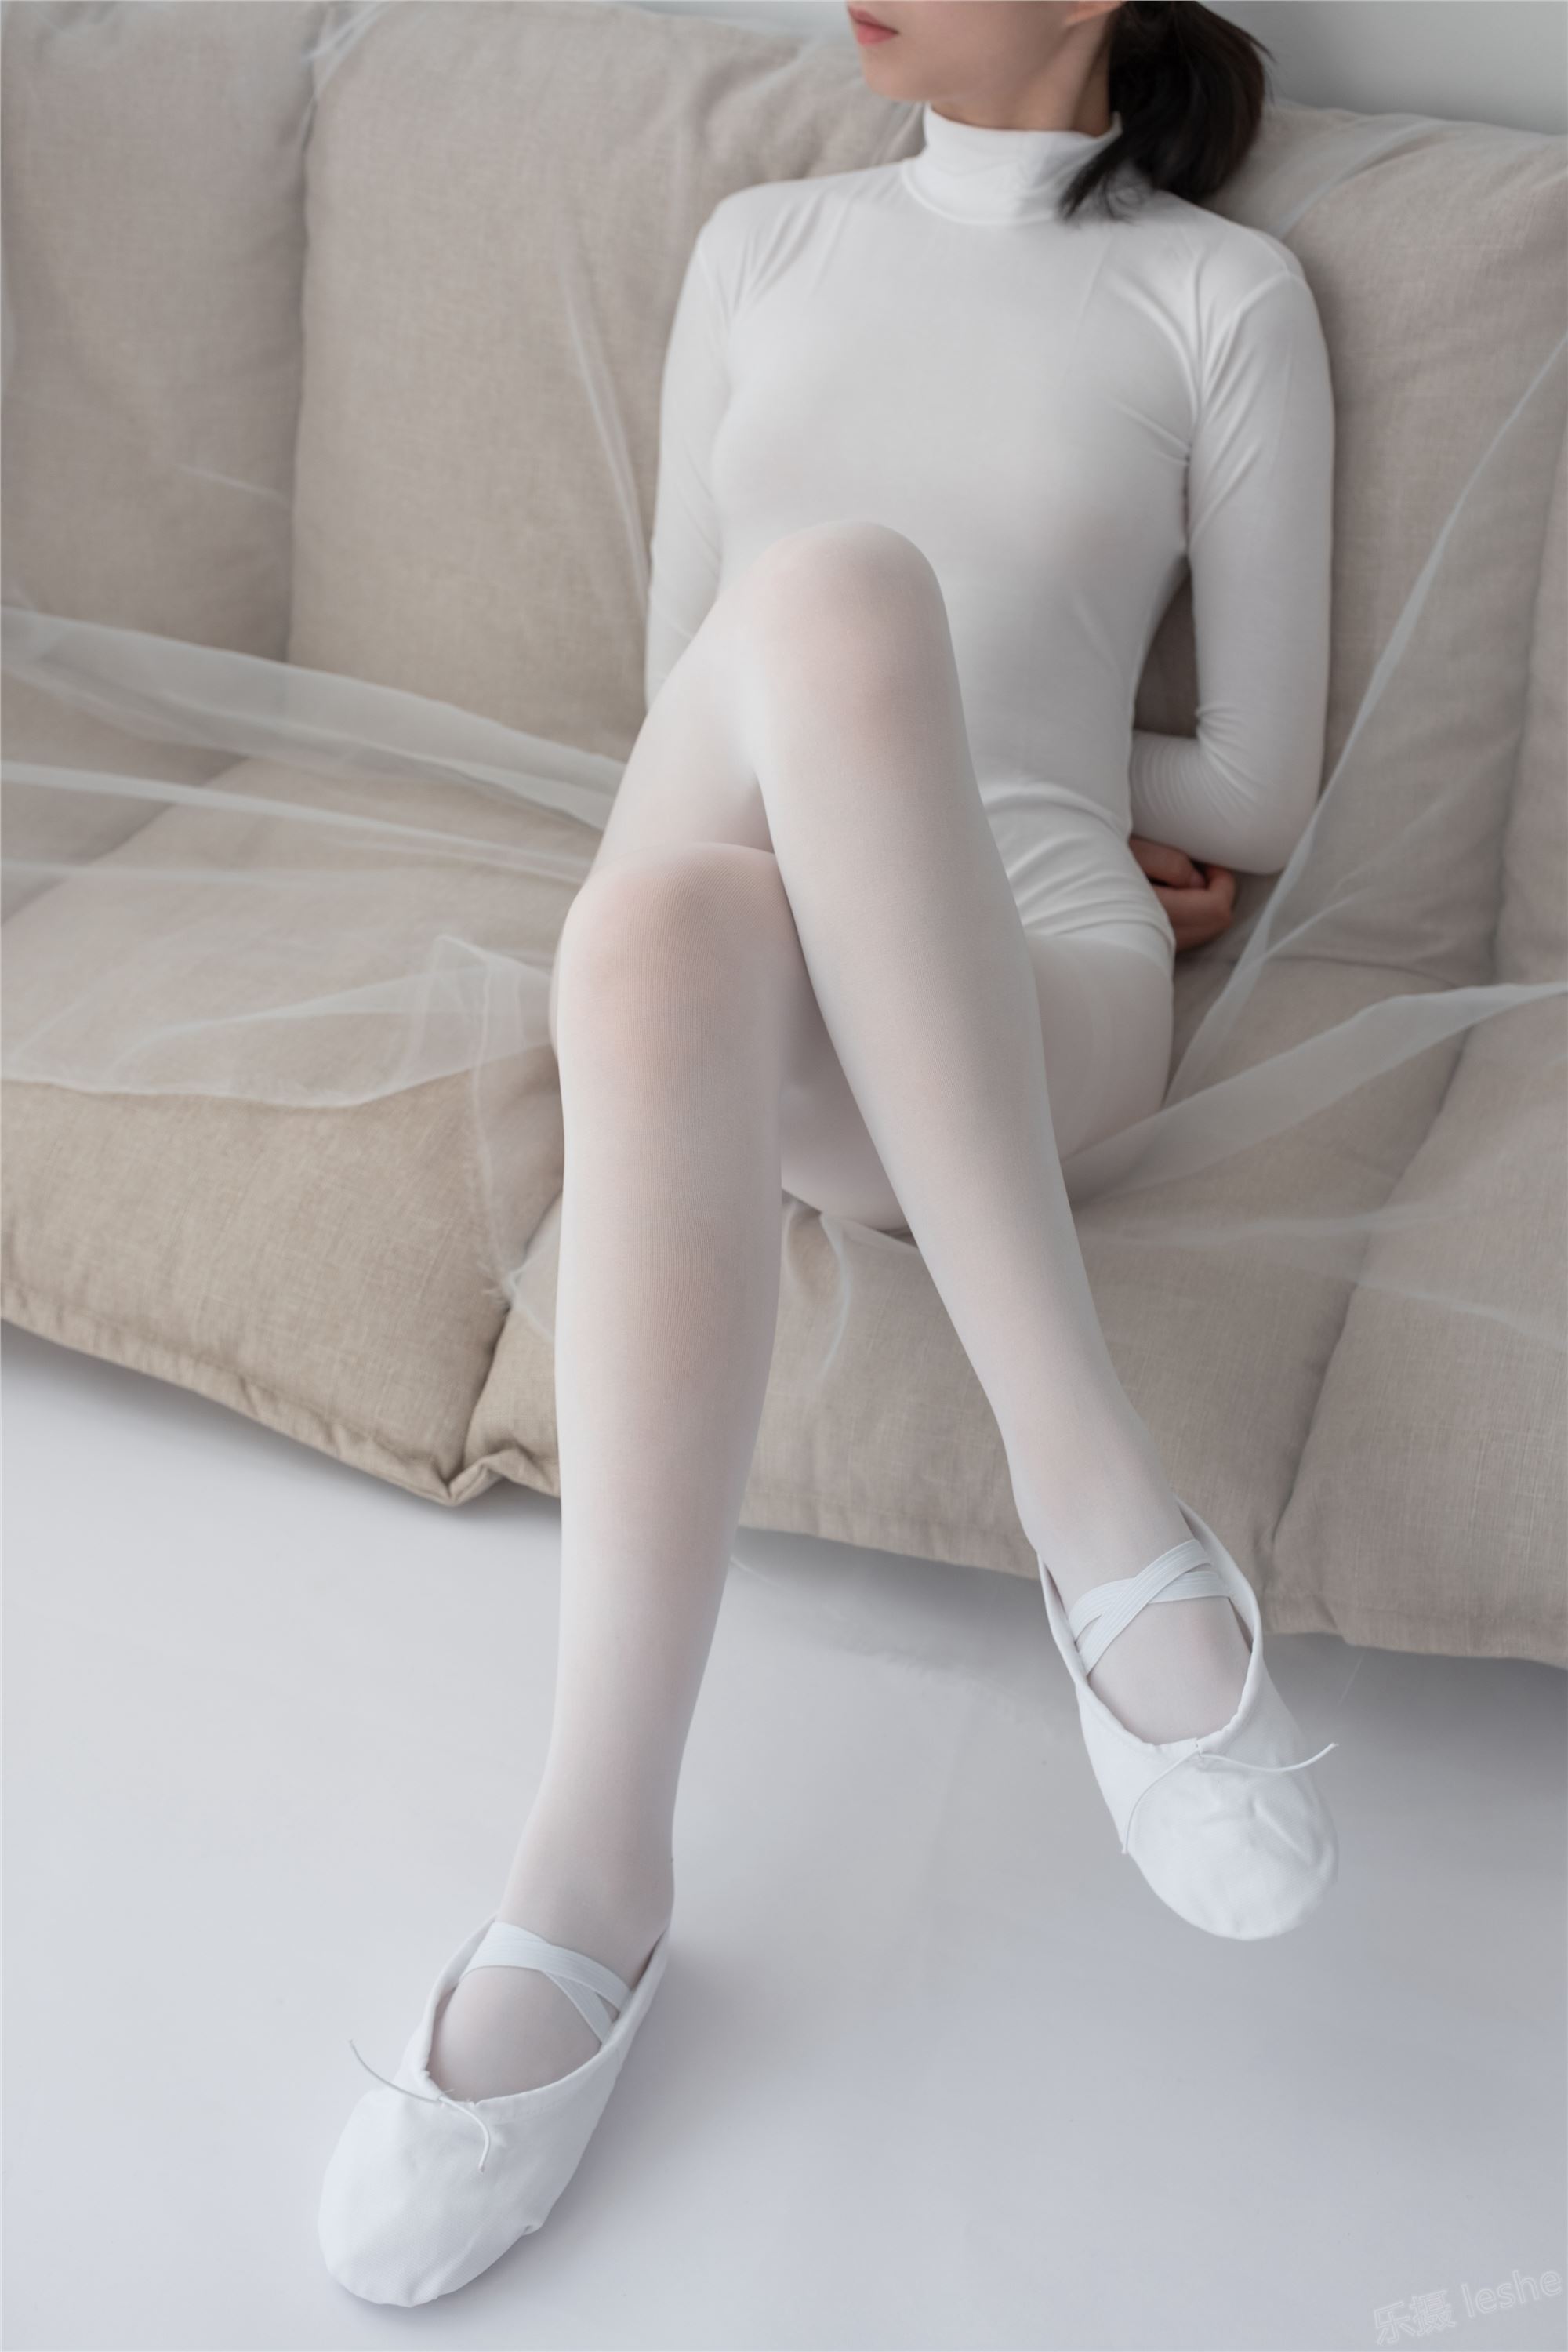 [Sen Luo consortia] photo of lolis' feet the temptation of pure white alpha-007